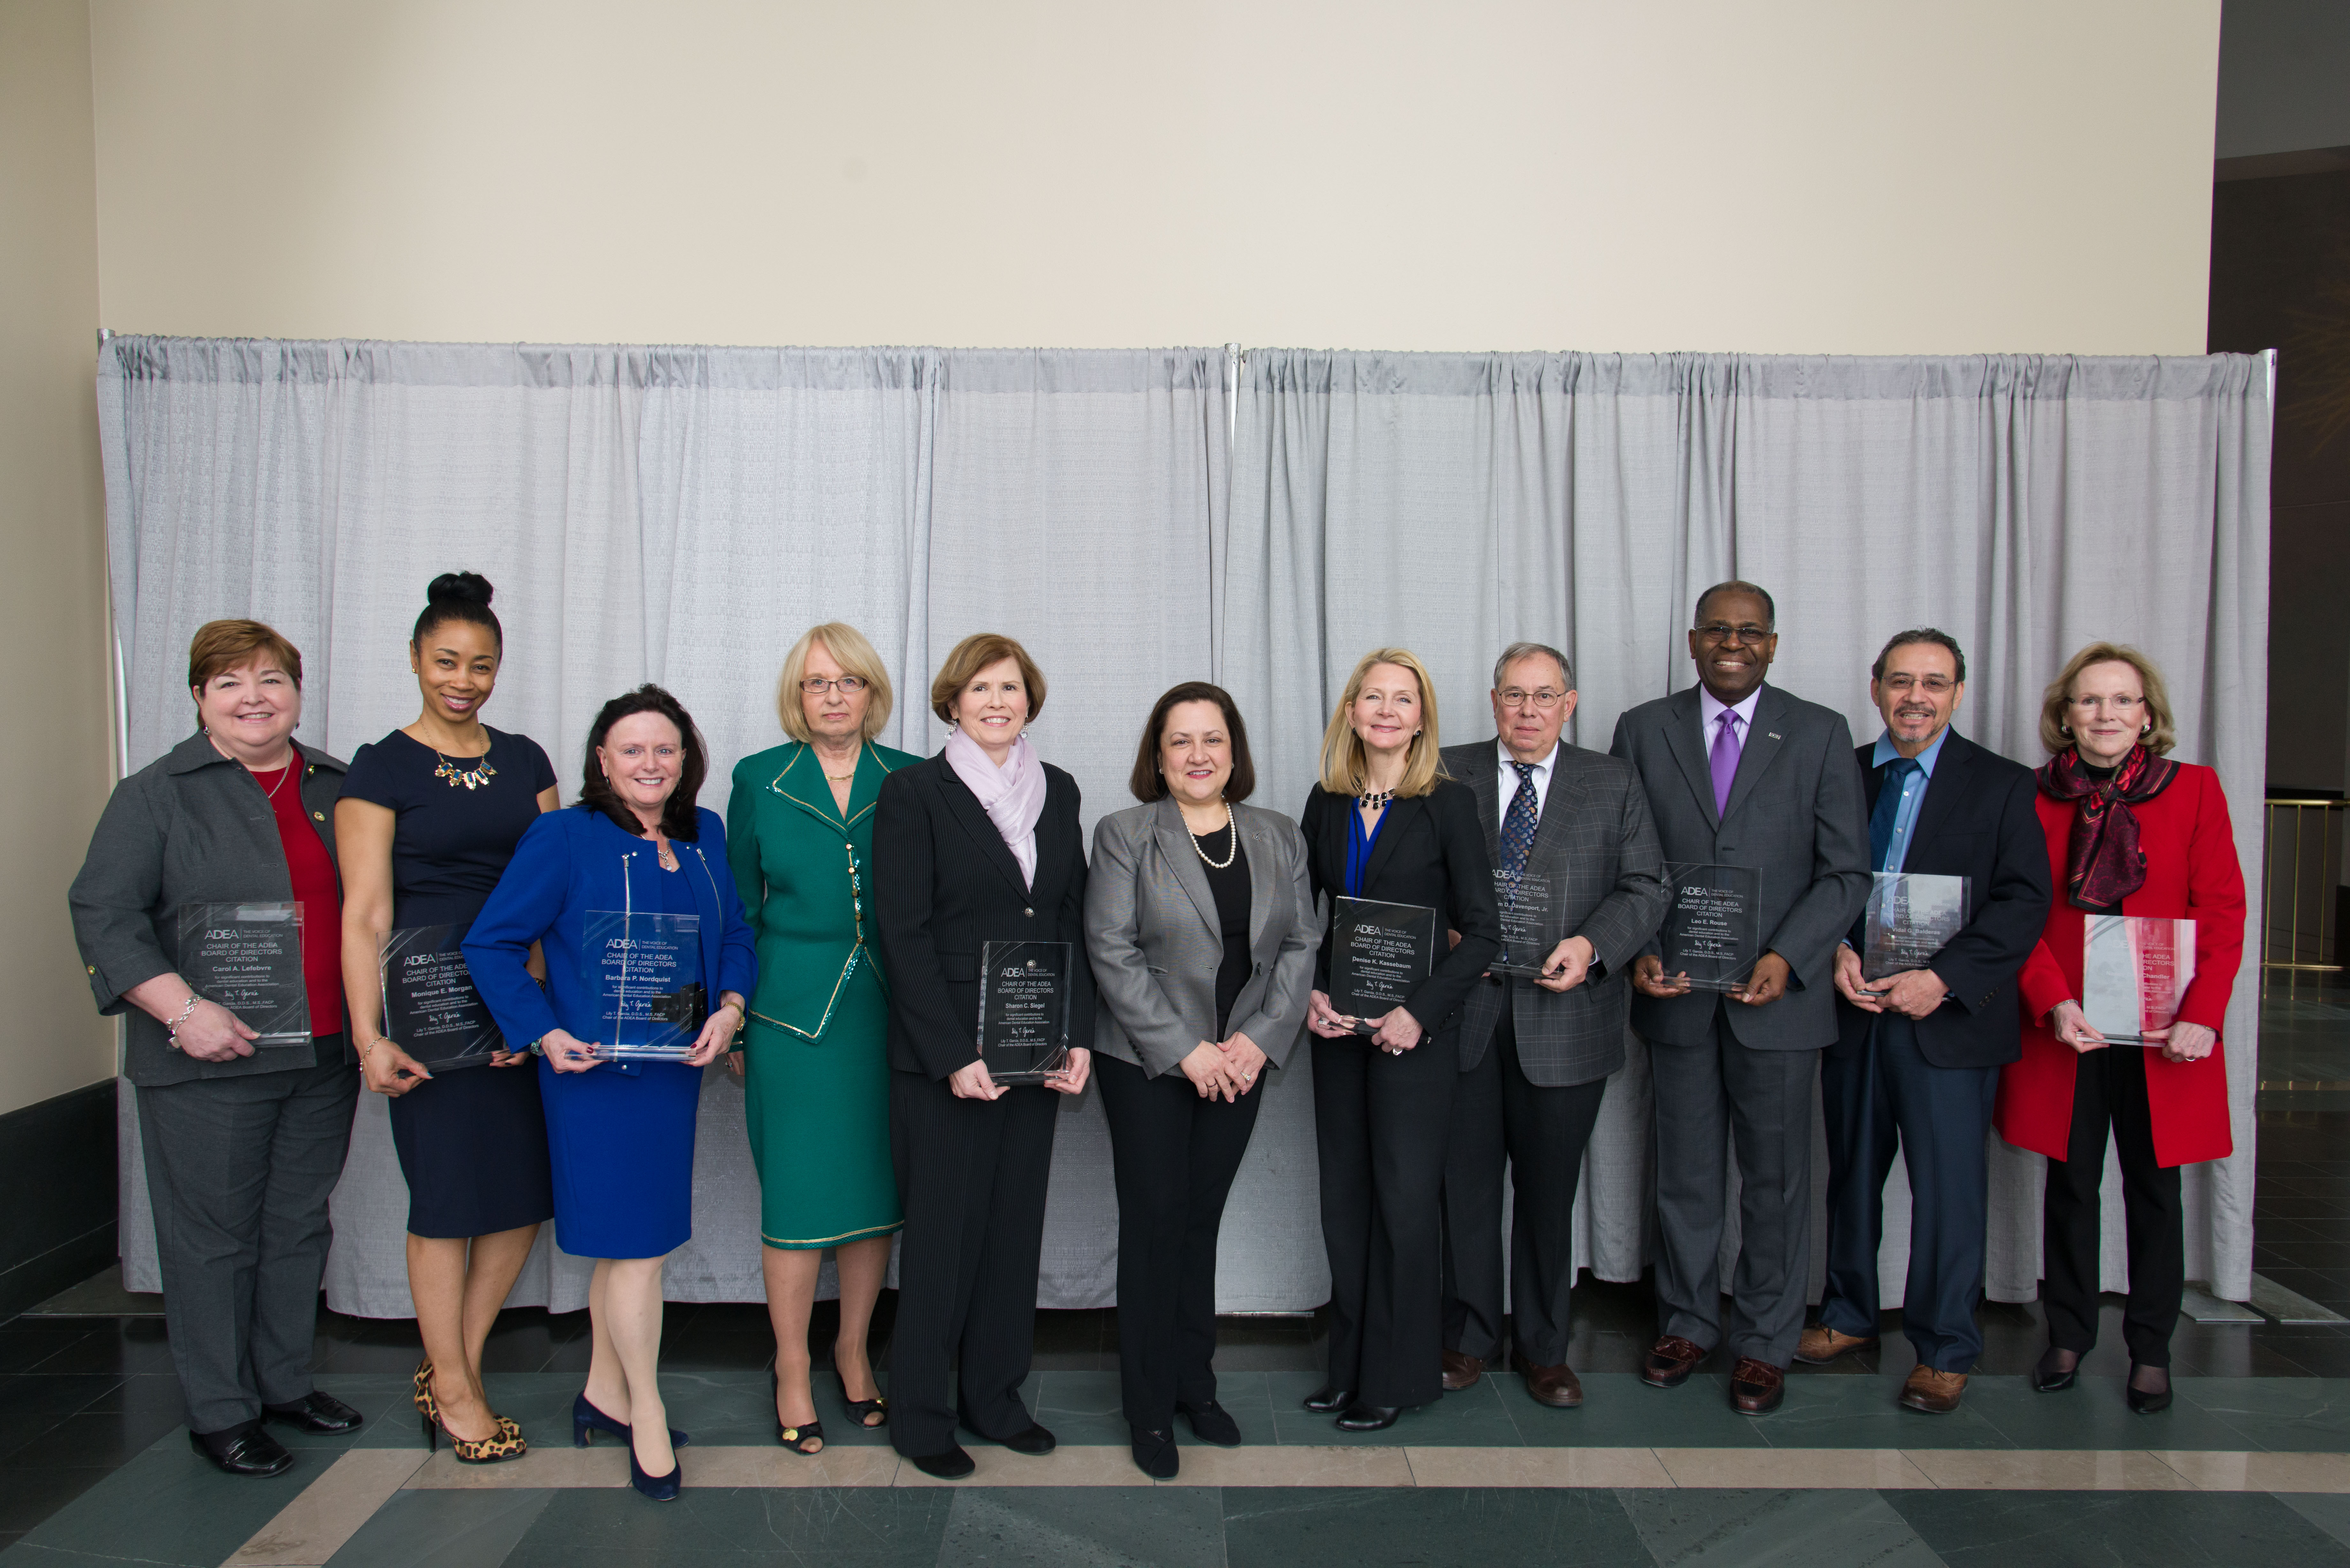 2015 ADEA Presidential Citation Awardees (minus DavidJohnsen)